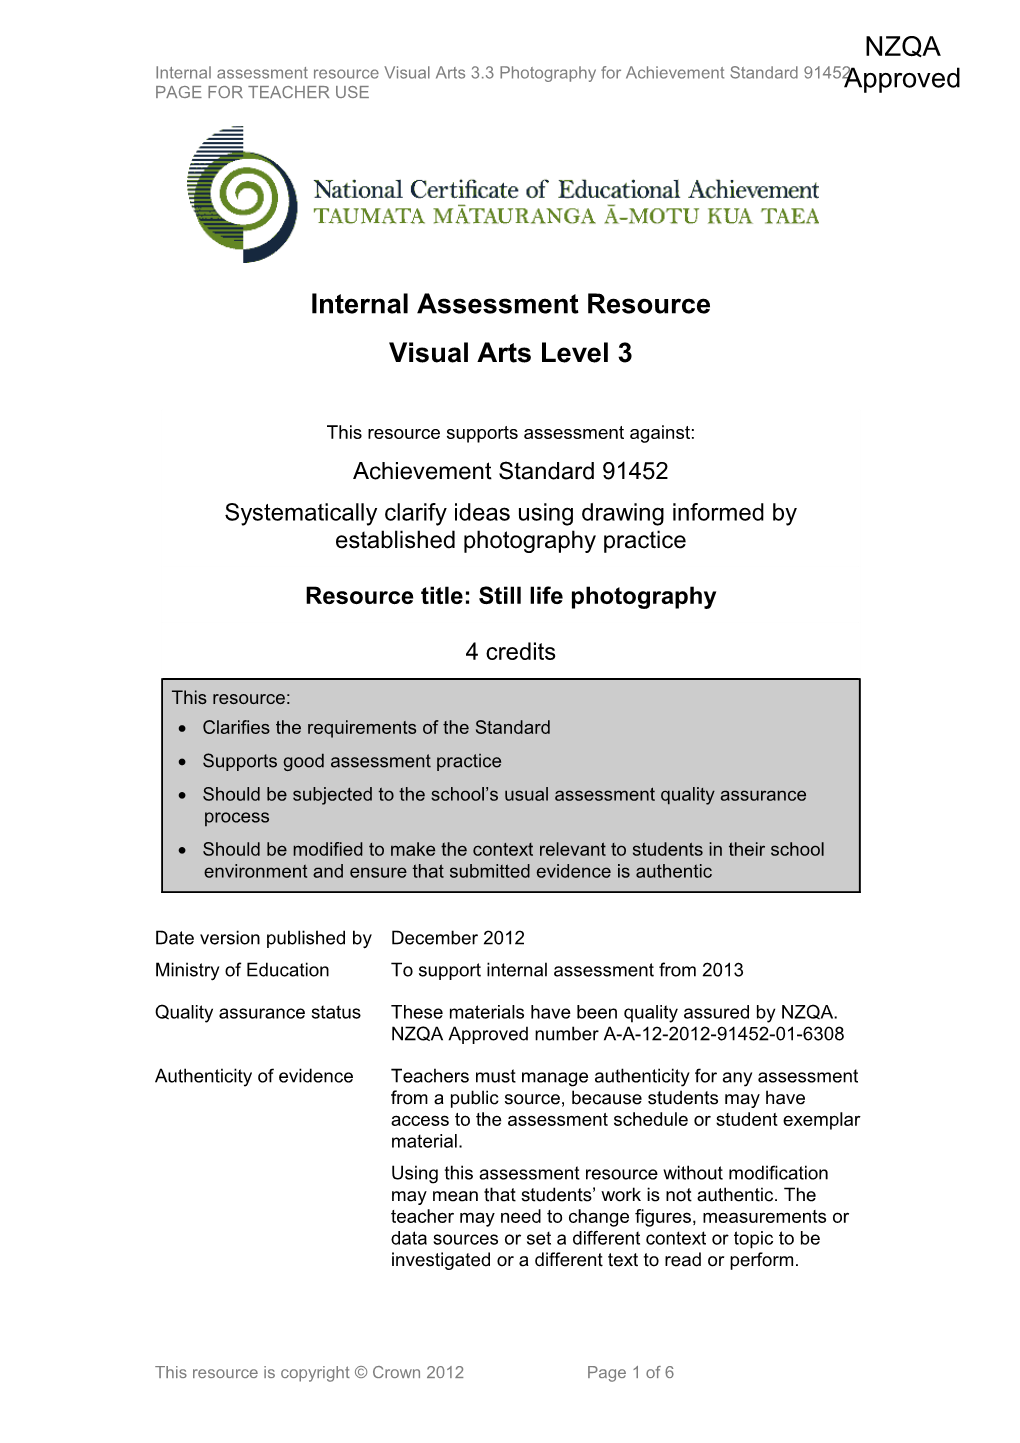 Level 3 Visual Arts Internal Assessment Resource